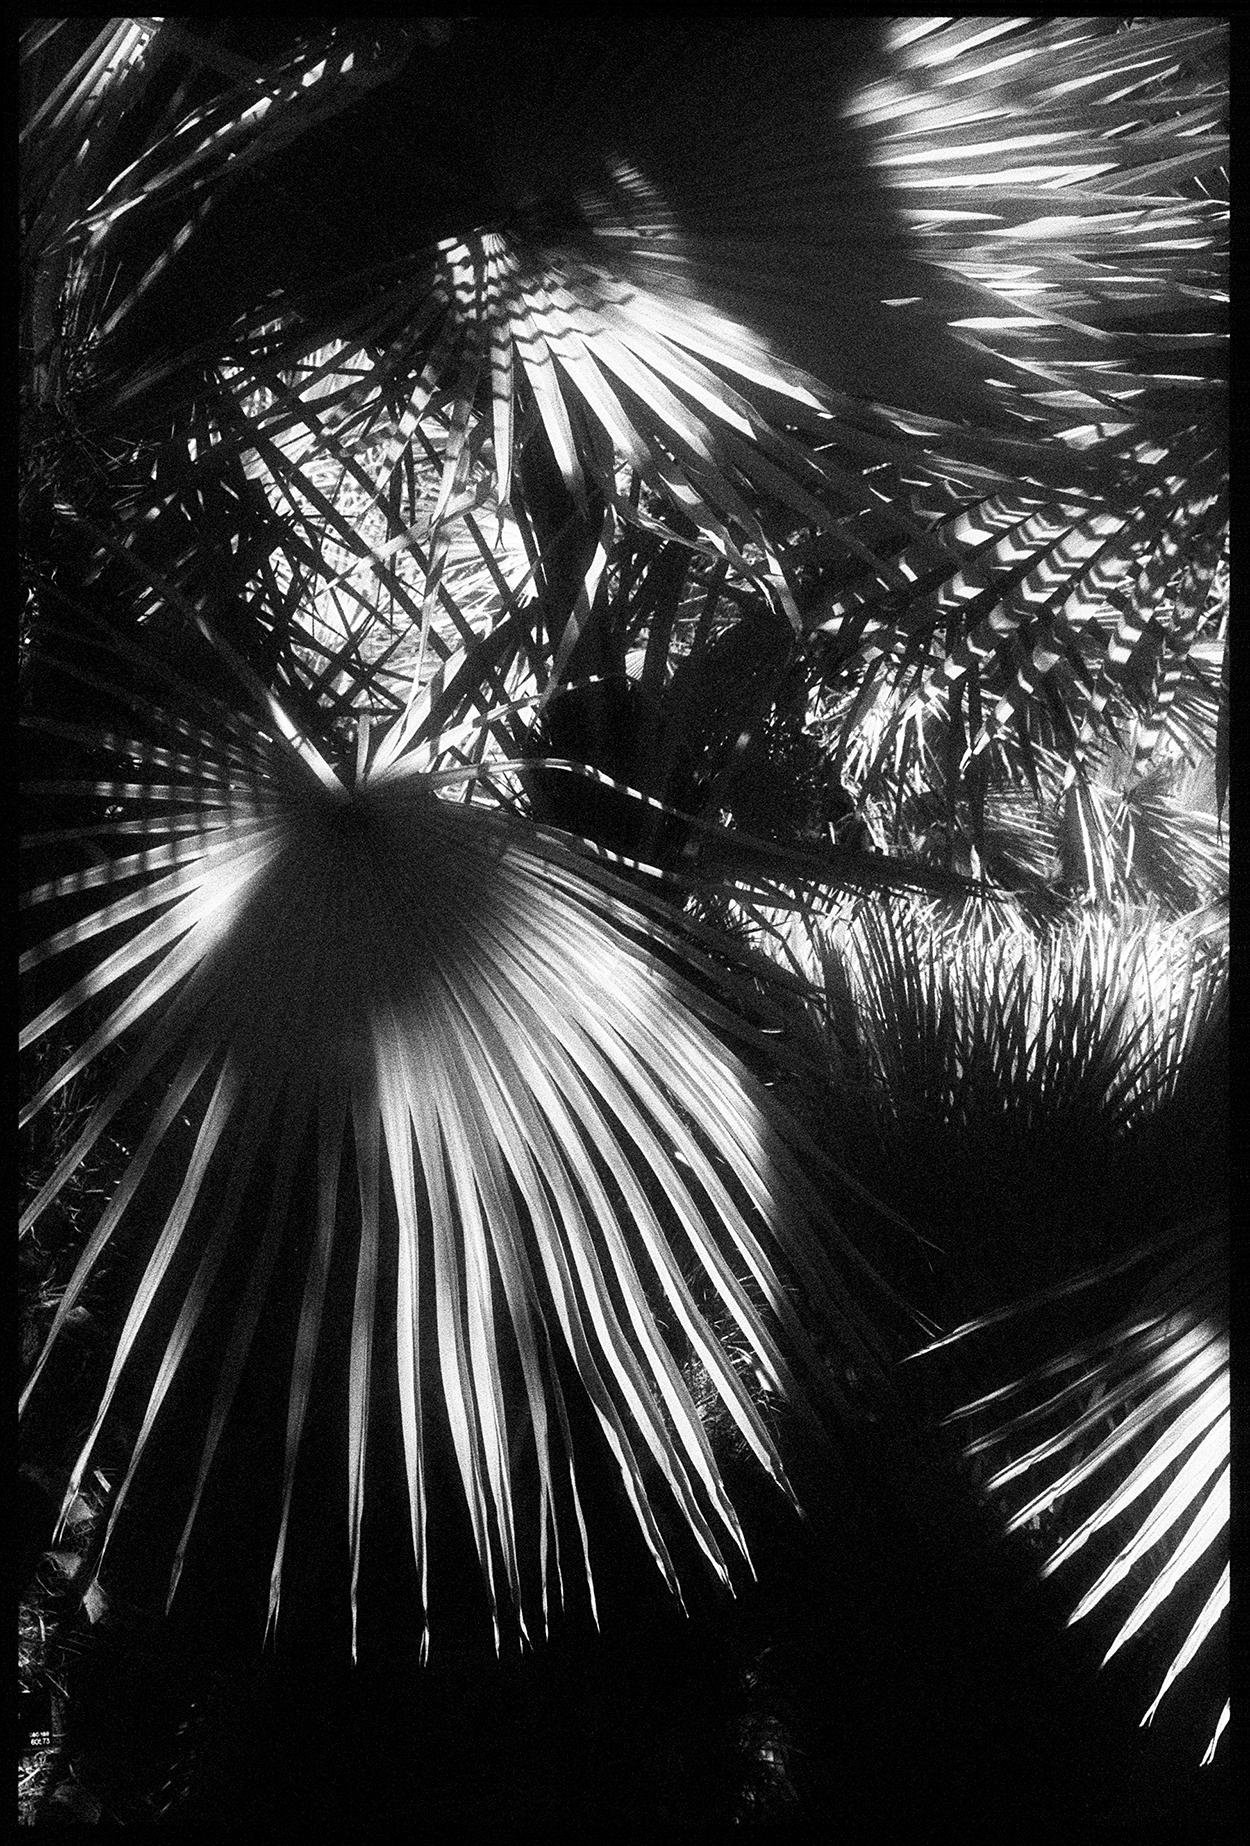 Edward Alfano Black and White Photograph - Huntington Gardens XXV - Black & White Infrared of Palms Landscape Surreal Photo